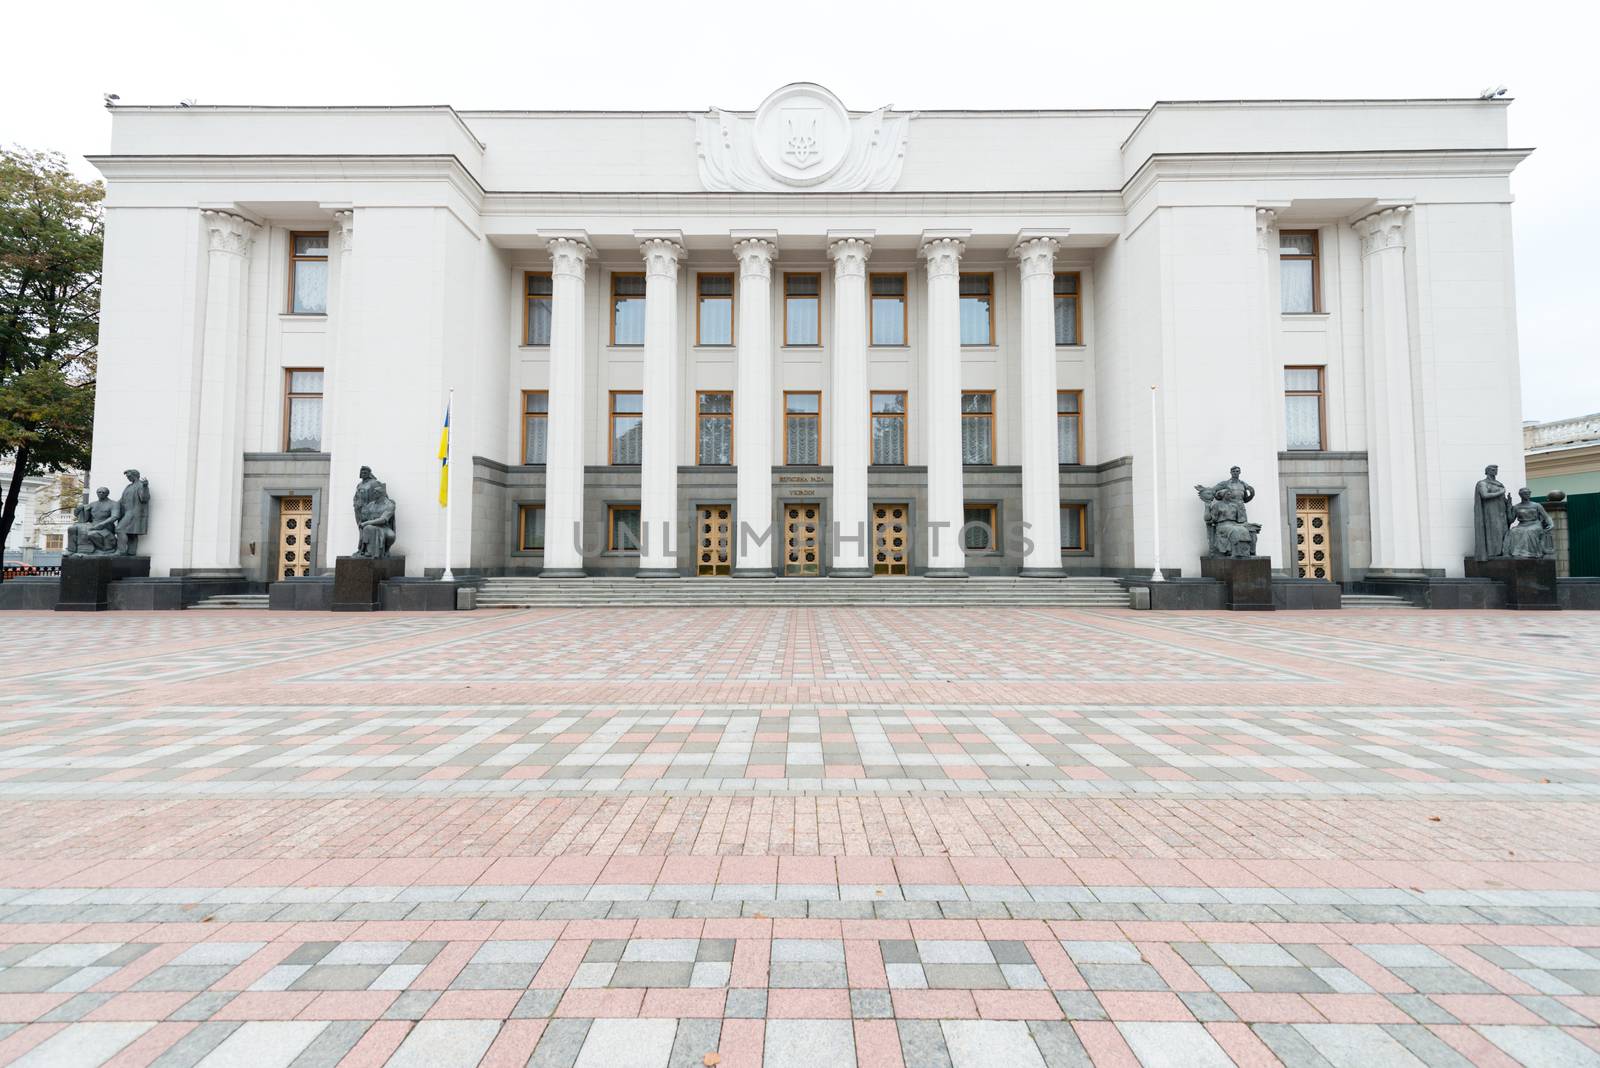 Parliament of Ukraine (Verkhovna Rada) in Kiev, Ukraine  by iryna_rasko